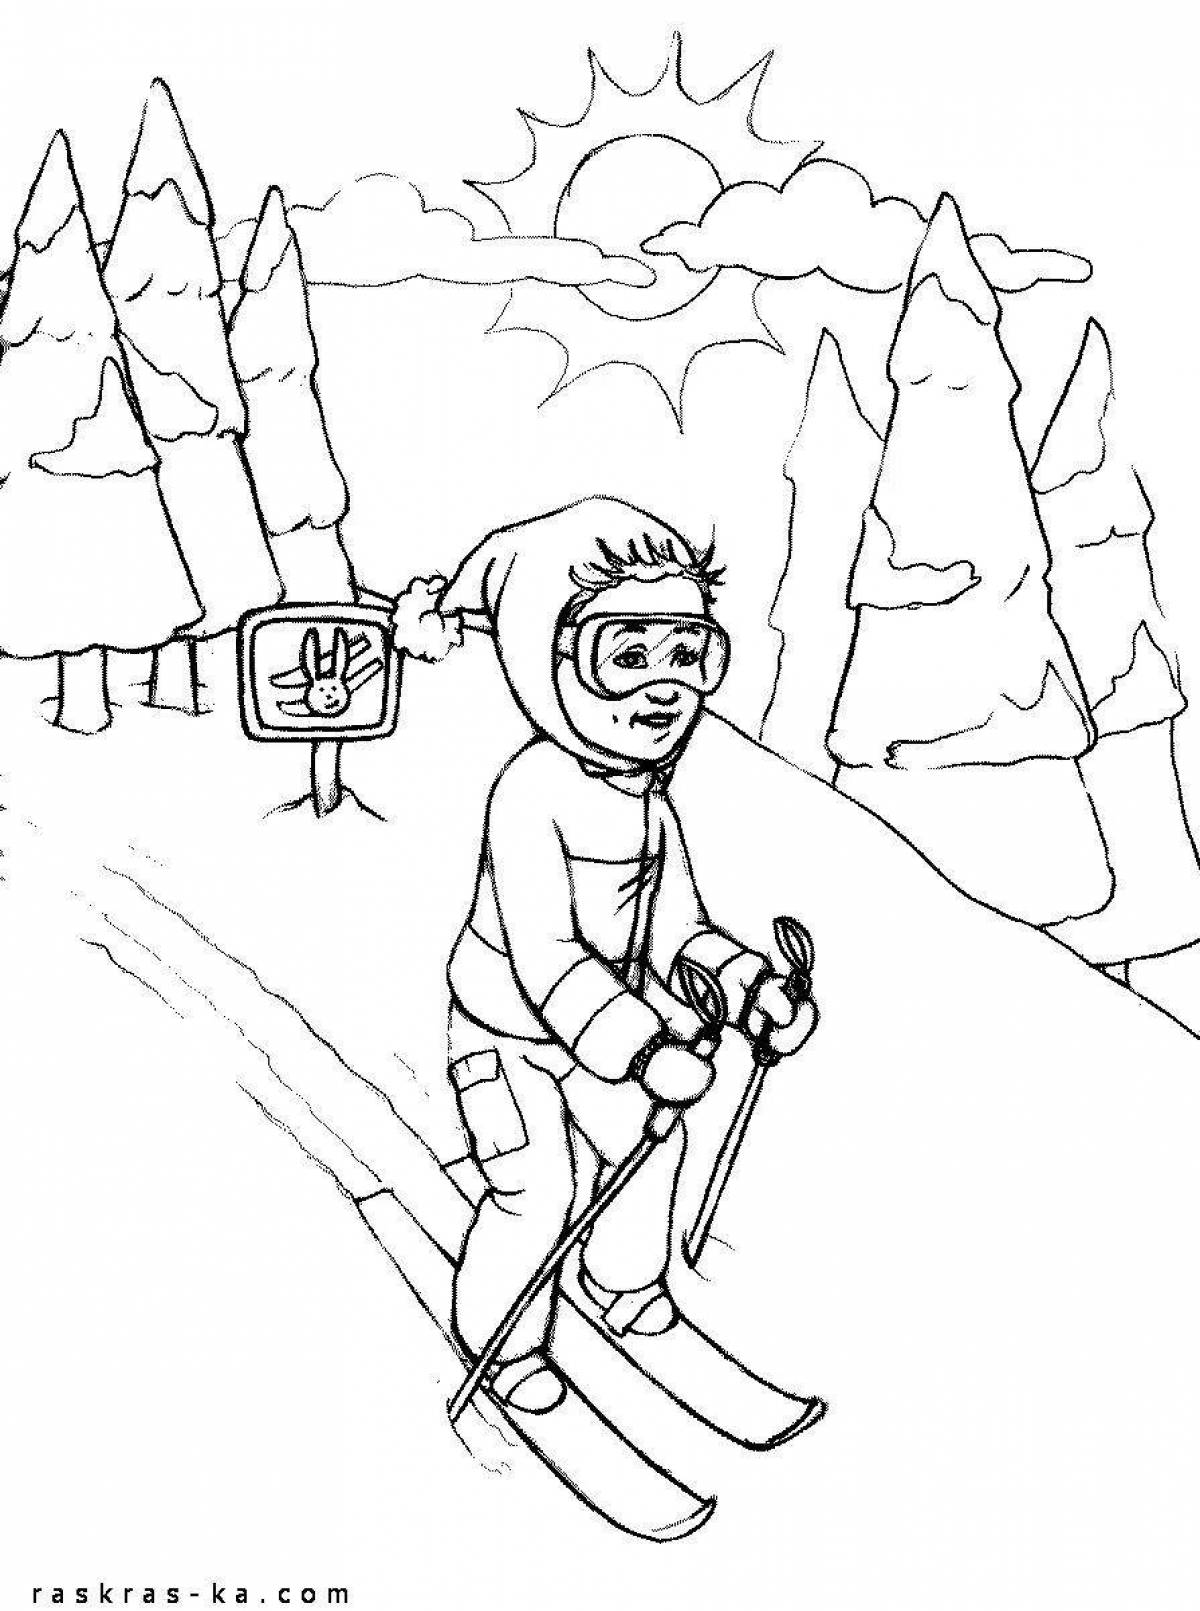 Coloring book adventurous boy skiing